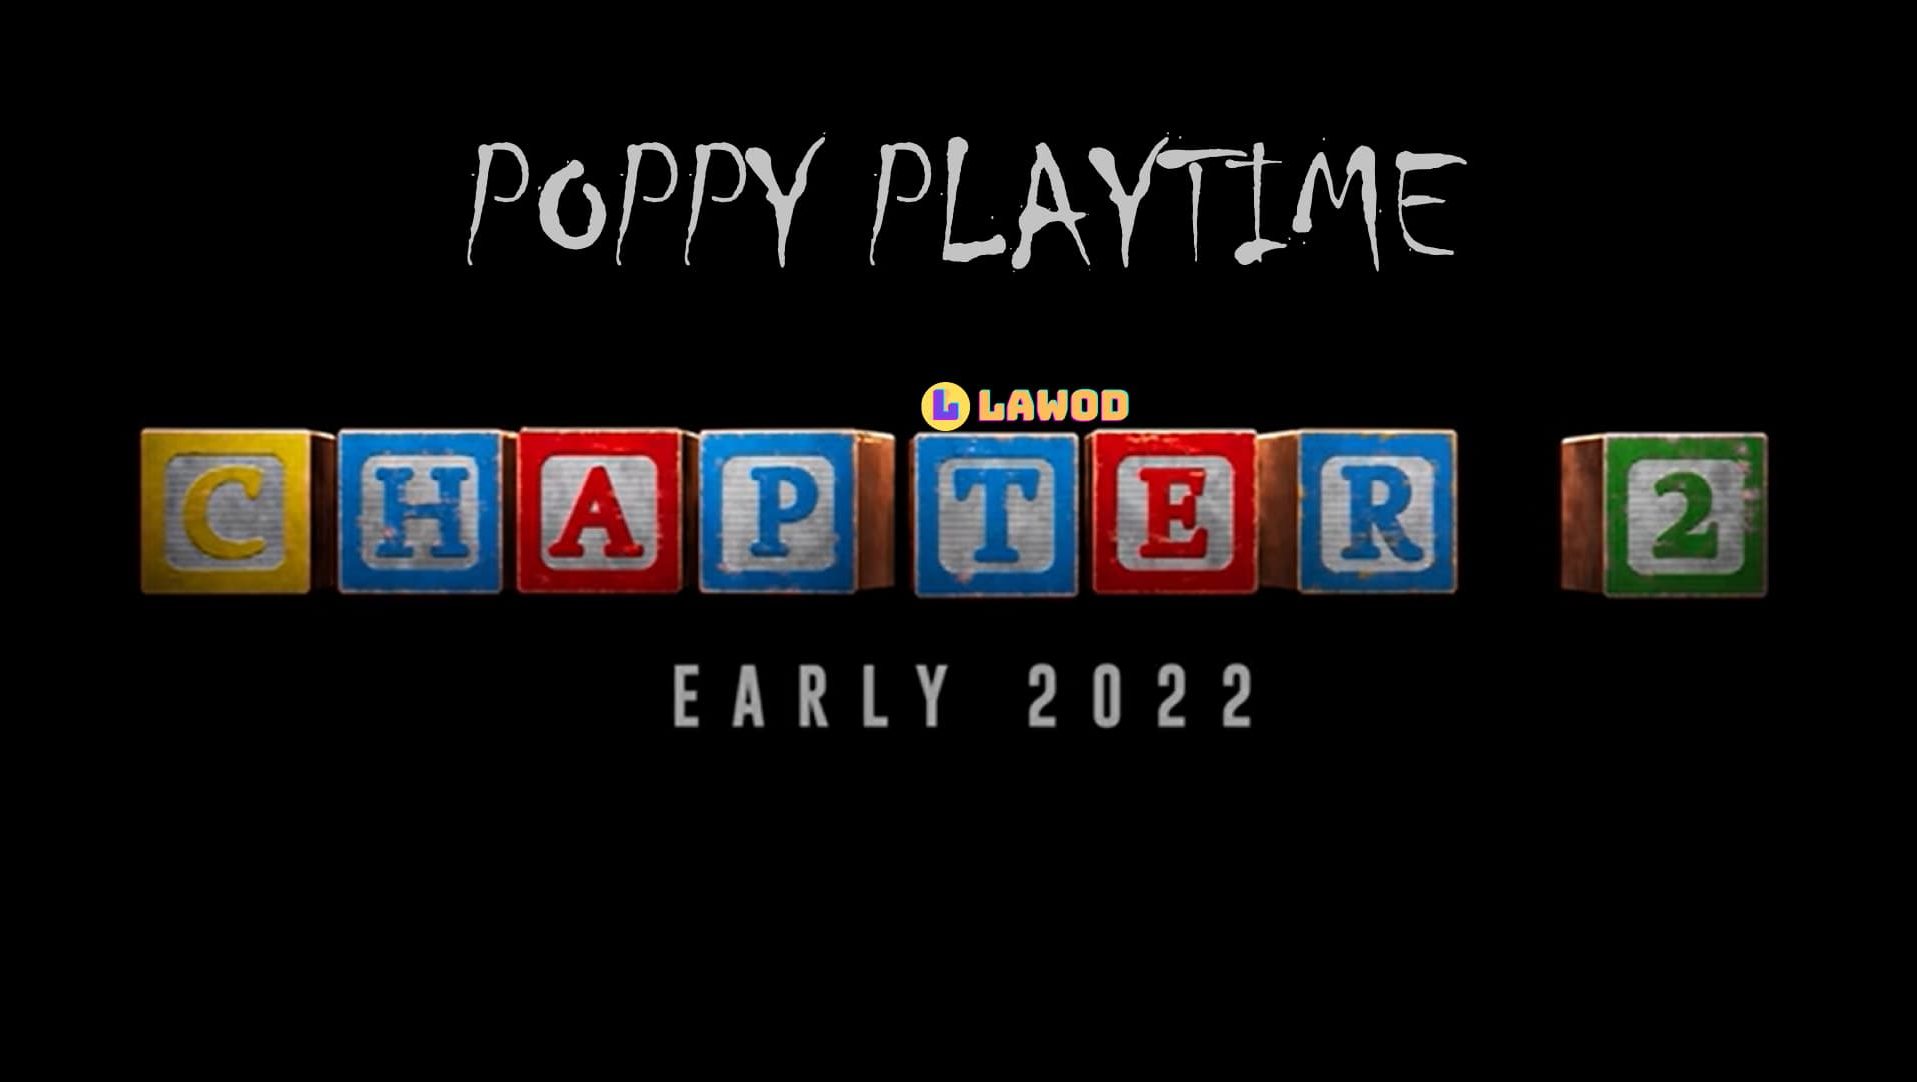 Логотип playtime. Poppy Playtime 2 часть. Poppy Playtime логотип. Poppy Play time 3. Poppy Playtime надпись.